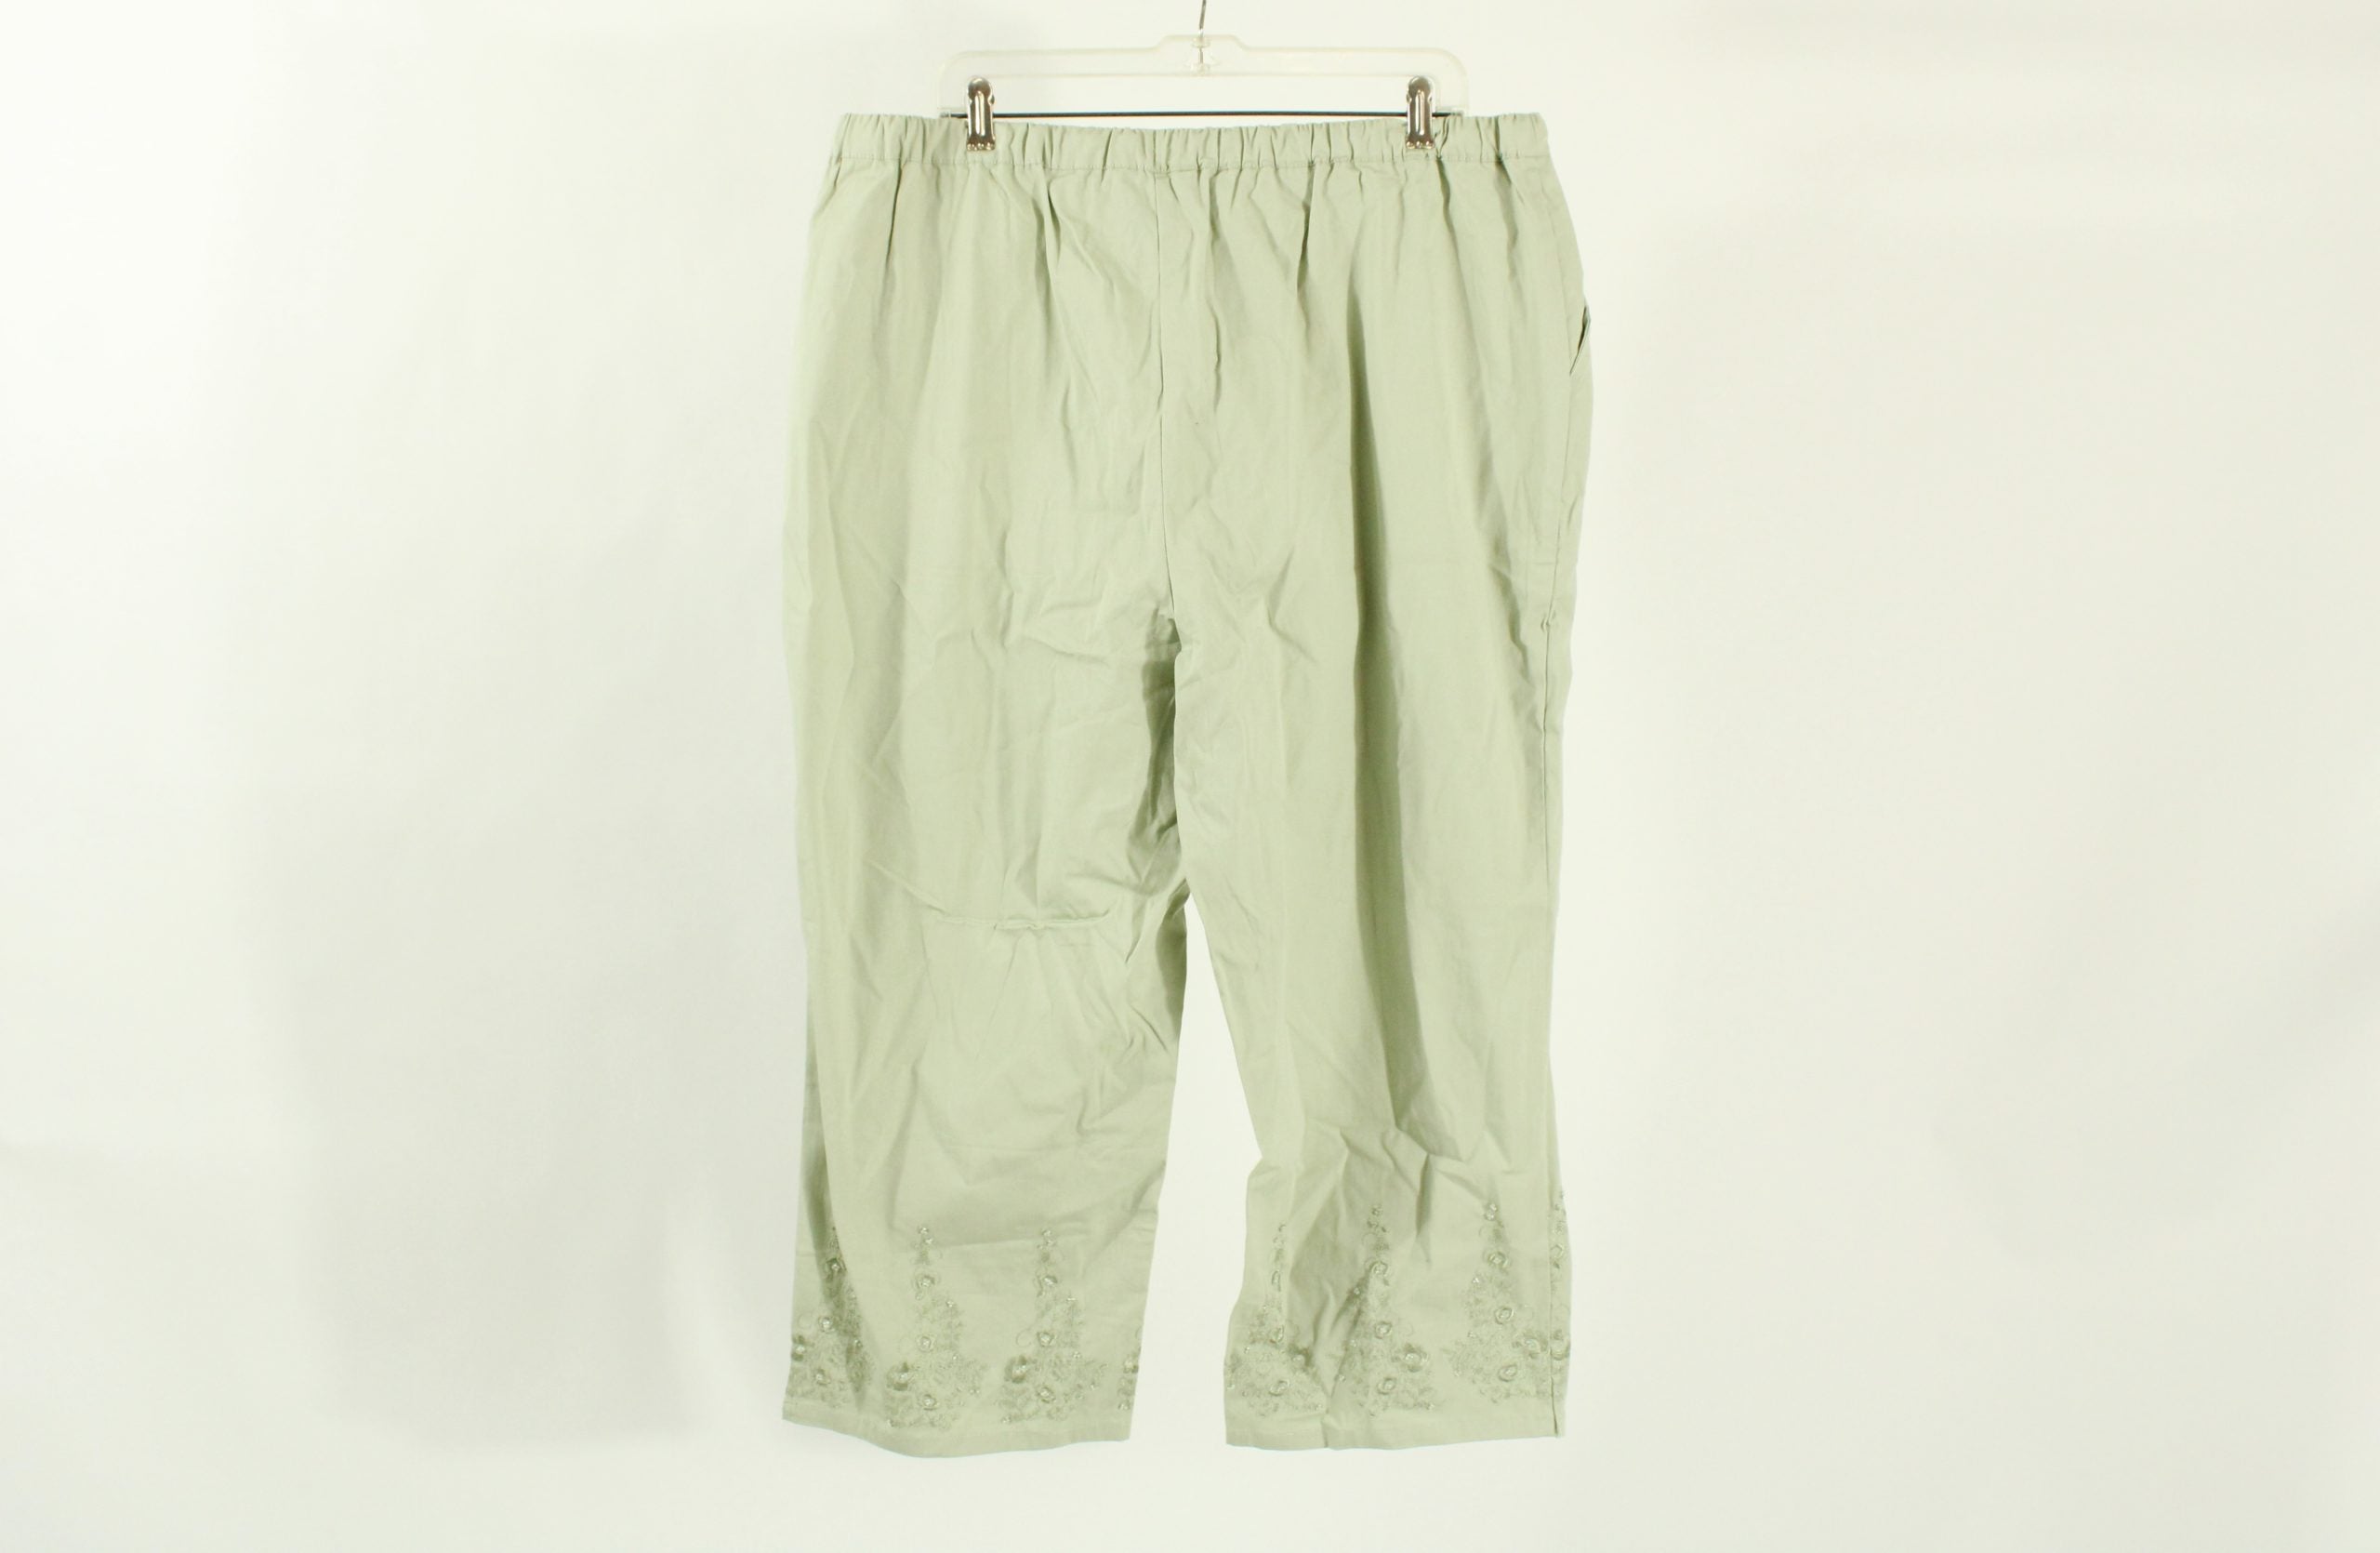 Denim & Co. Sage Green Summer Pants | Size 1X